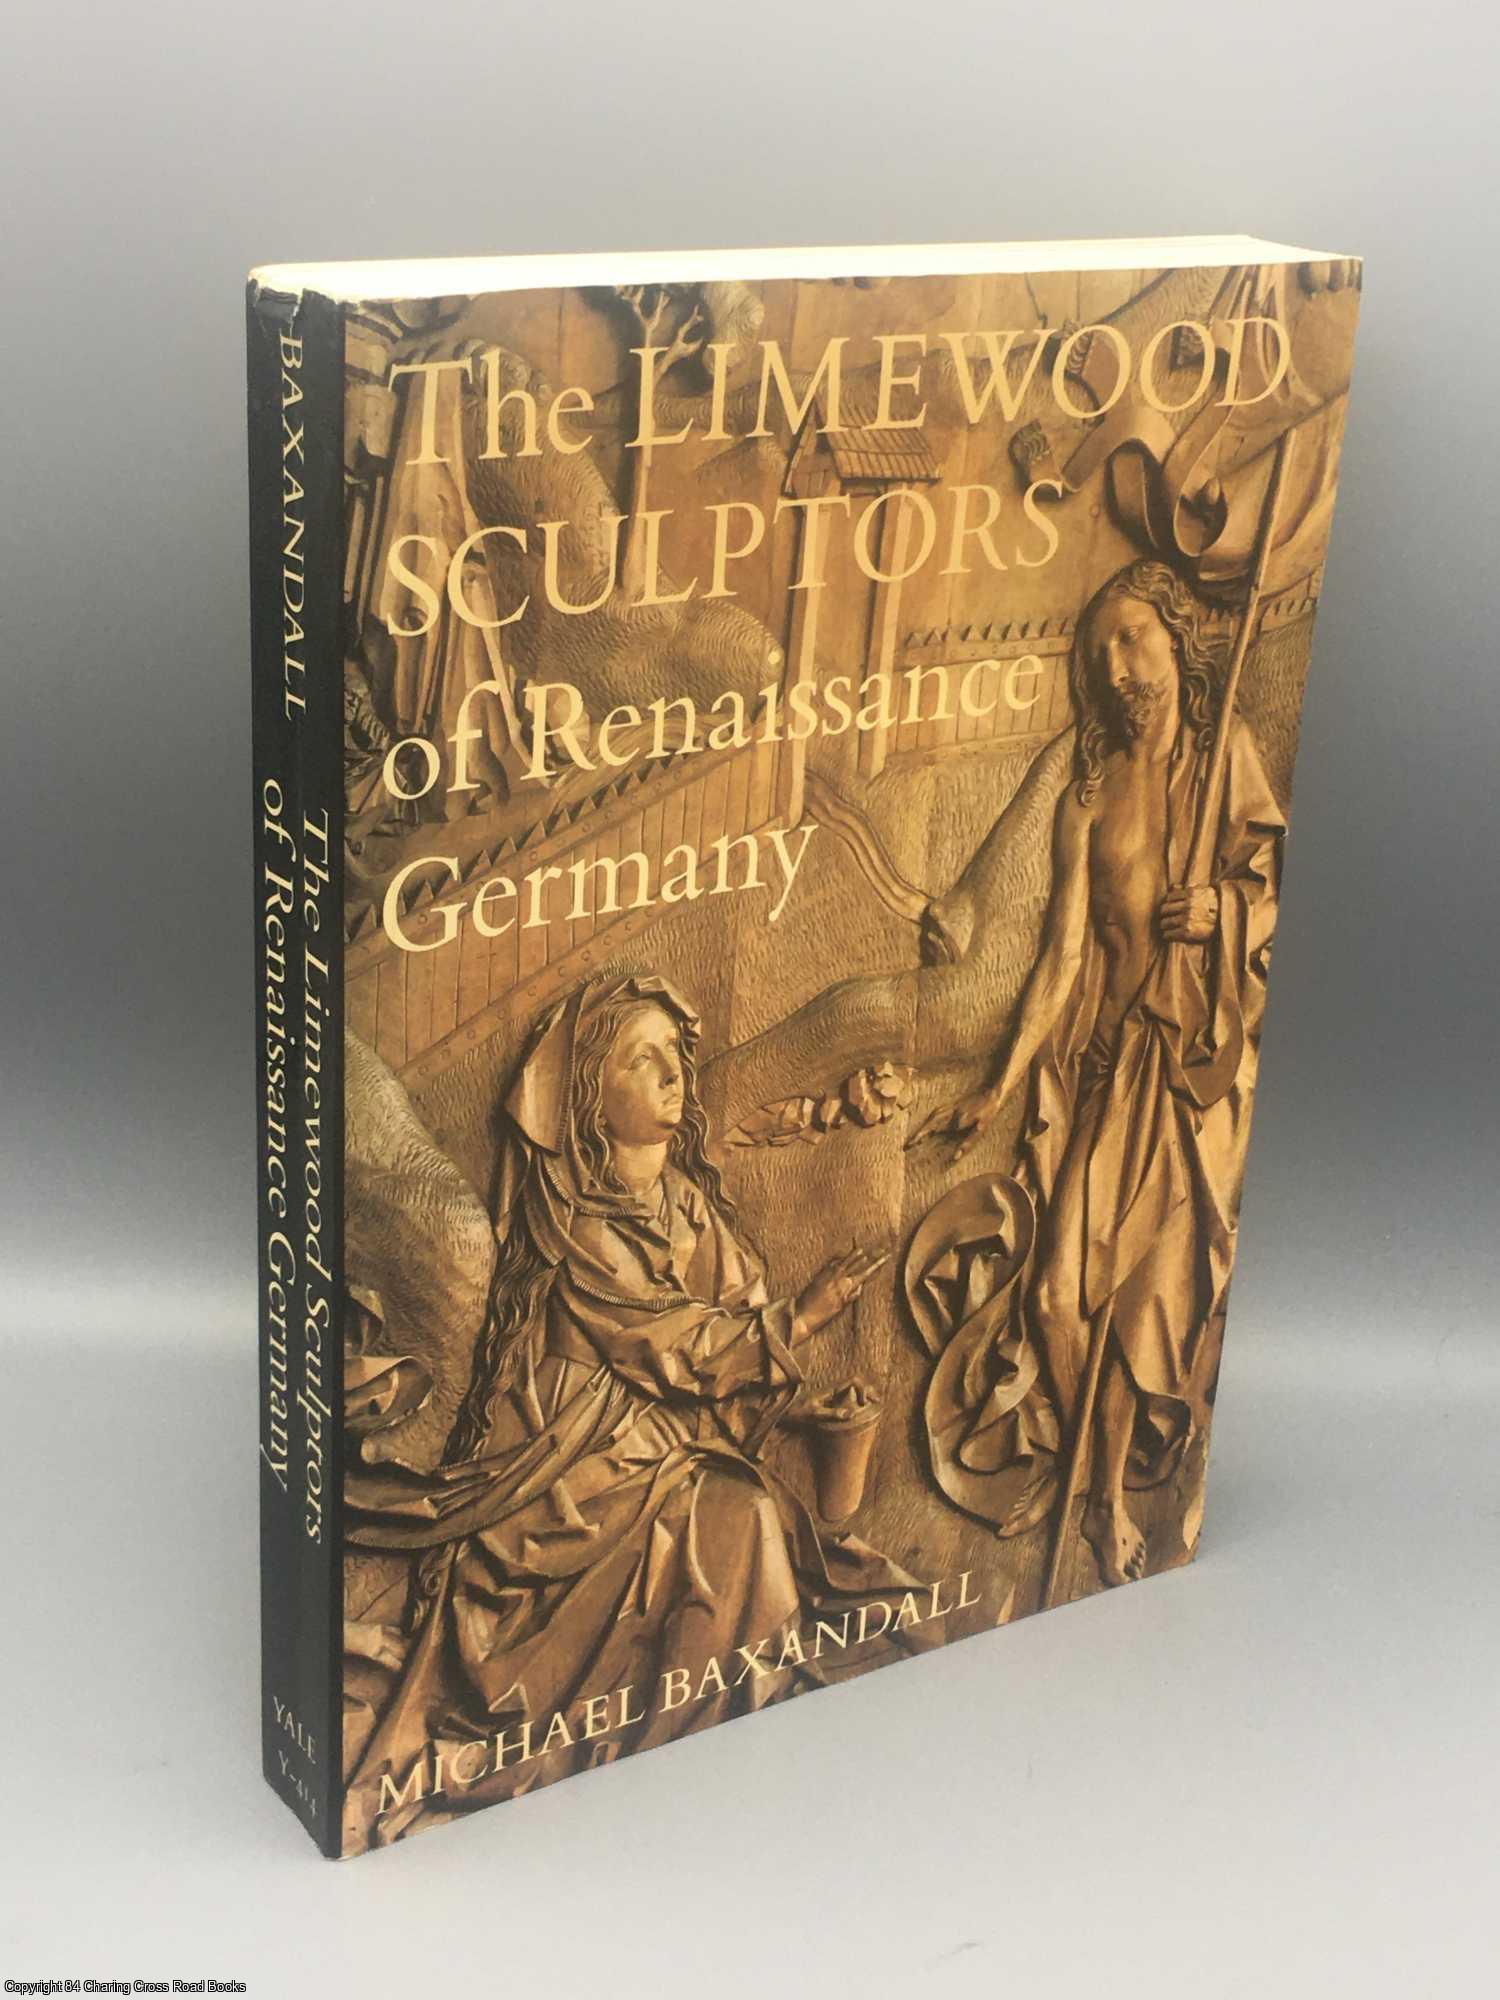 Baxandall, Michael - The Limewood Sculptors of Renaissance Germany